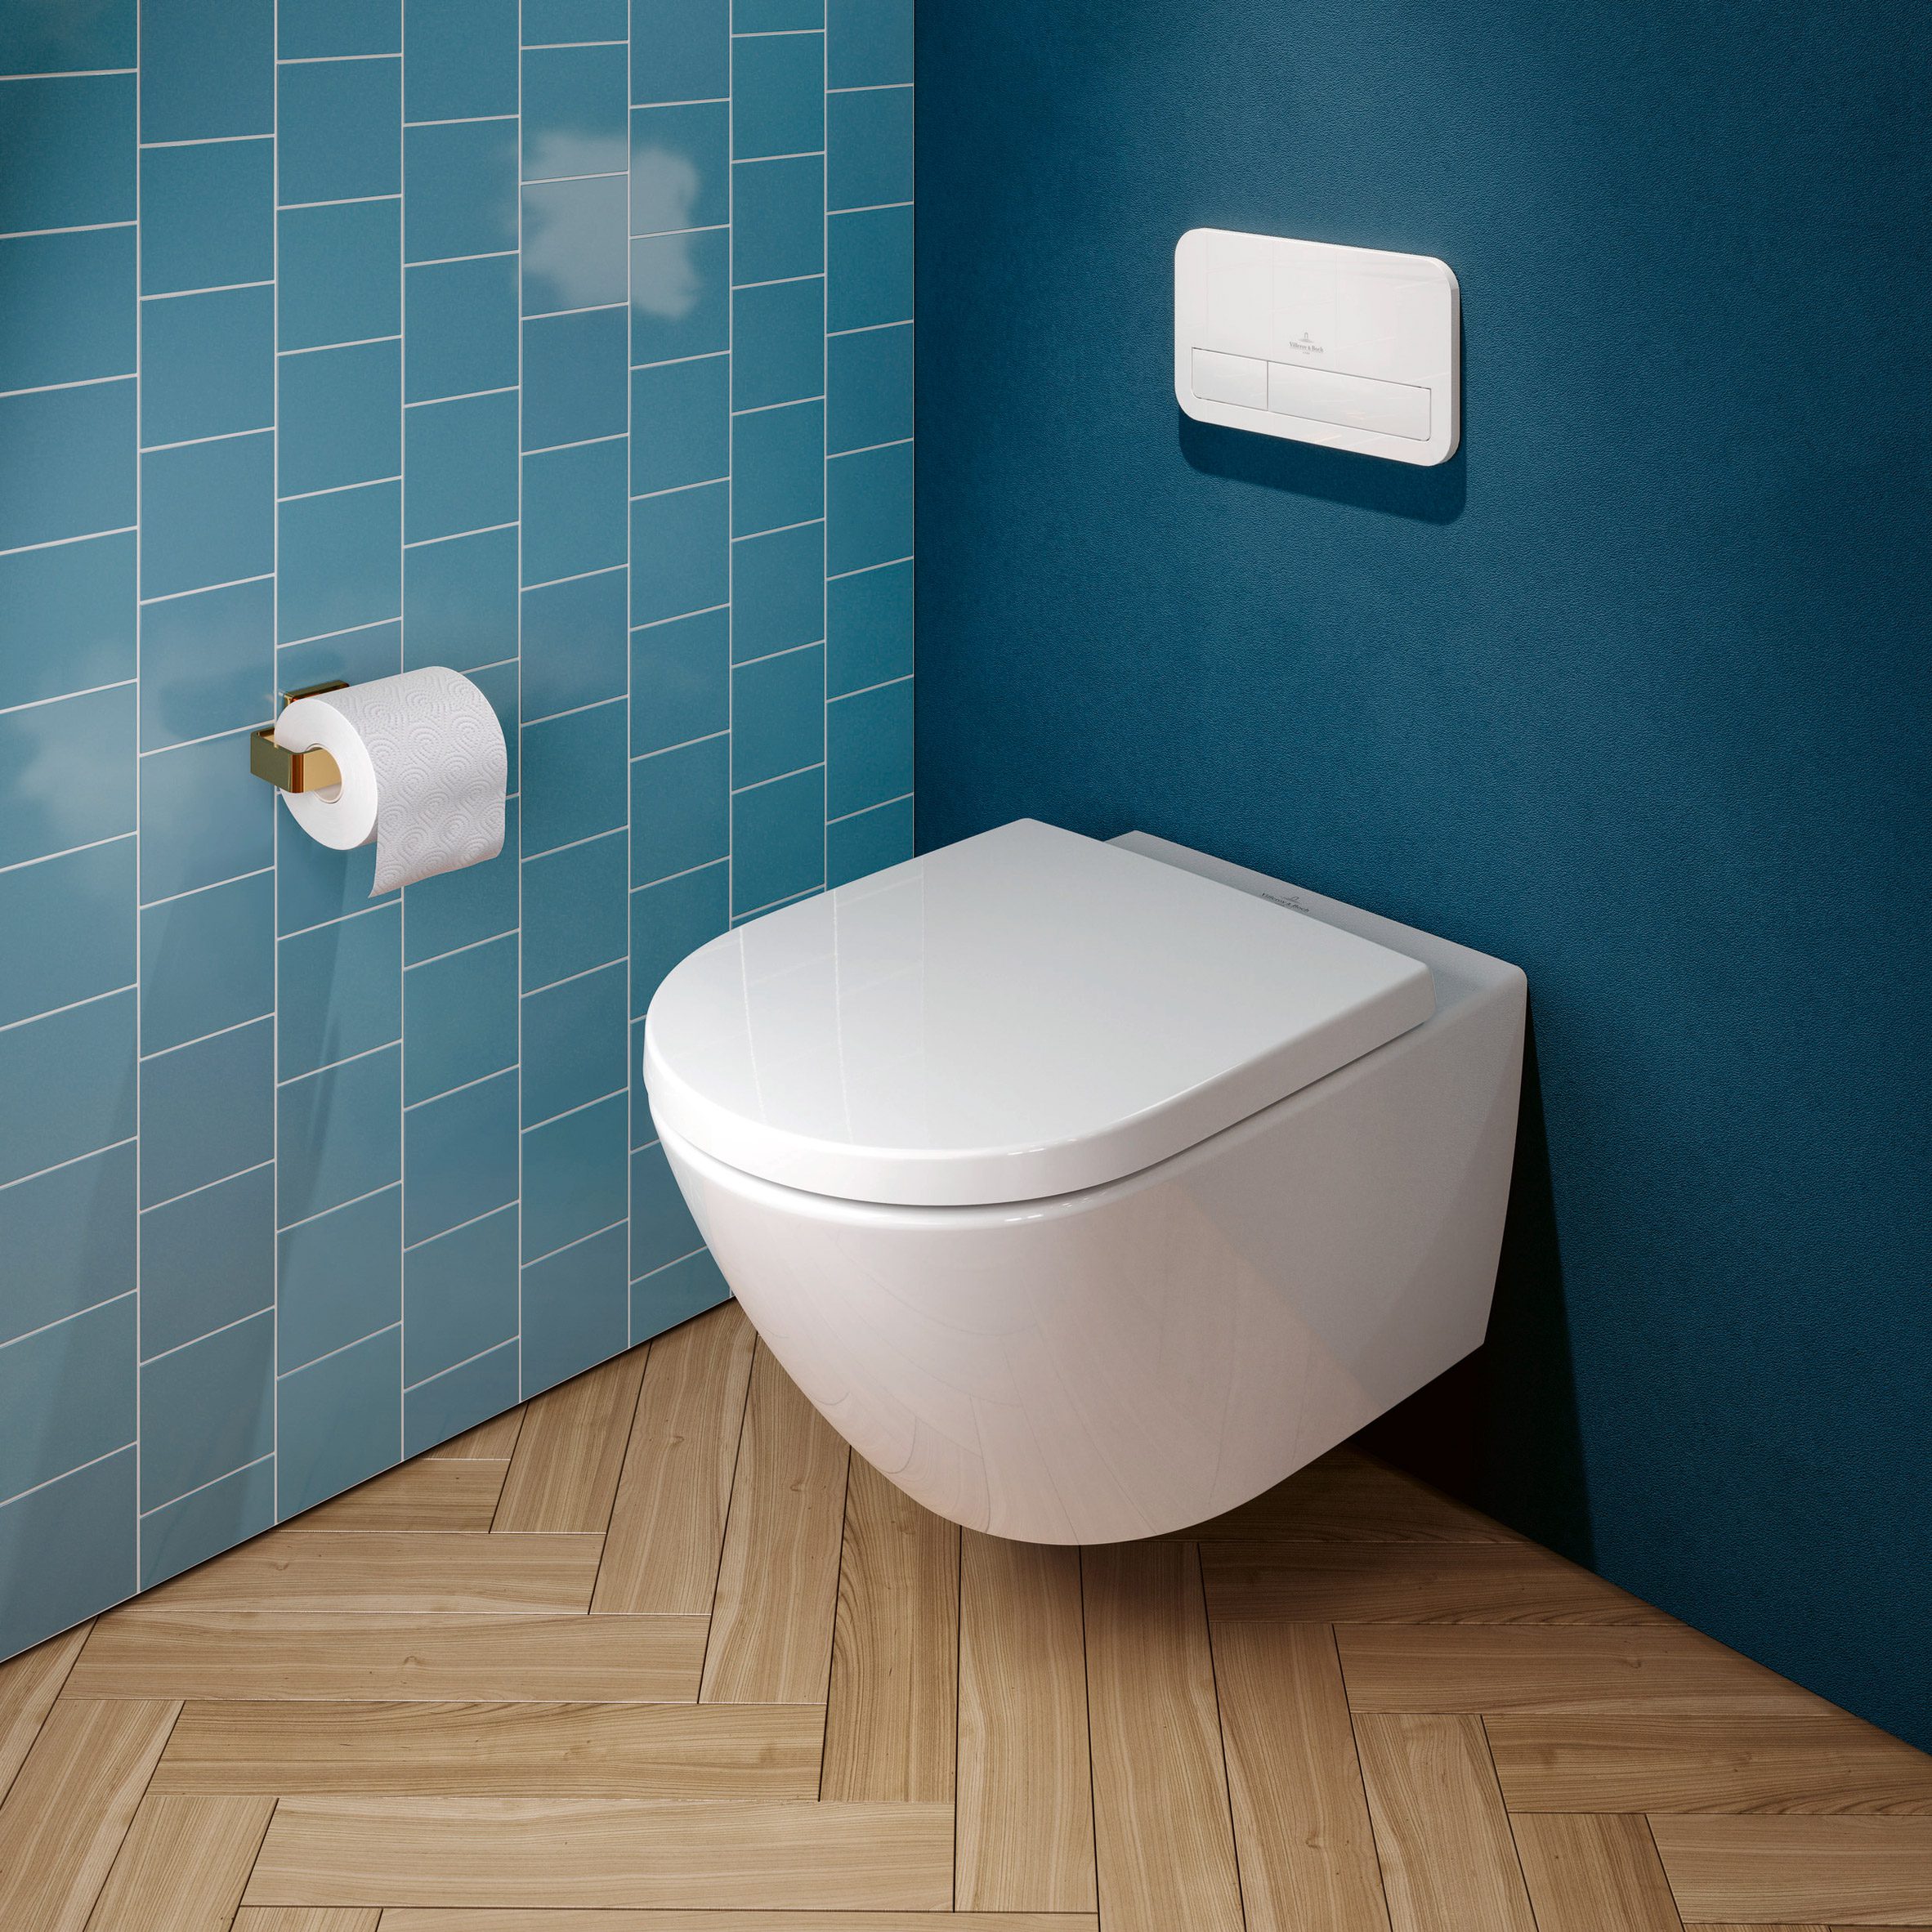 Onvergetelijk Productie Cerebrum Competition: win a TwistFlush toilet by Villeroy & Boch